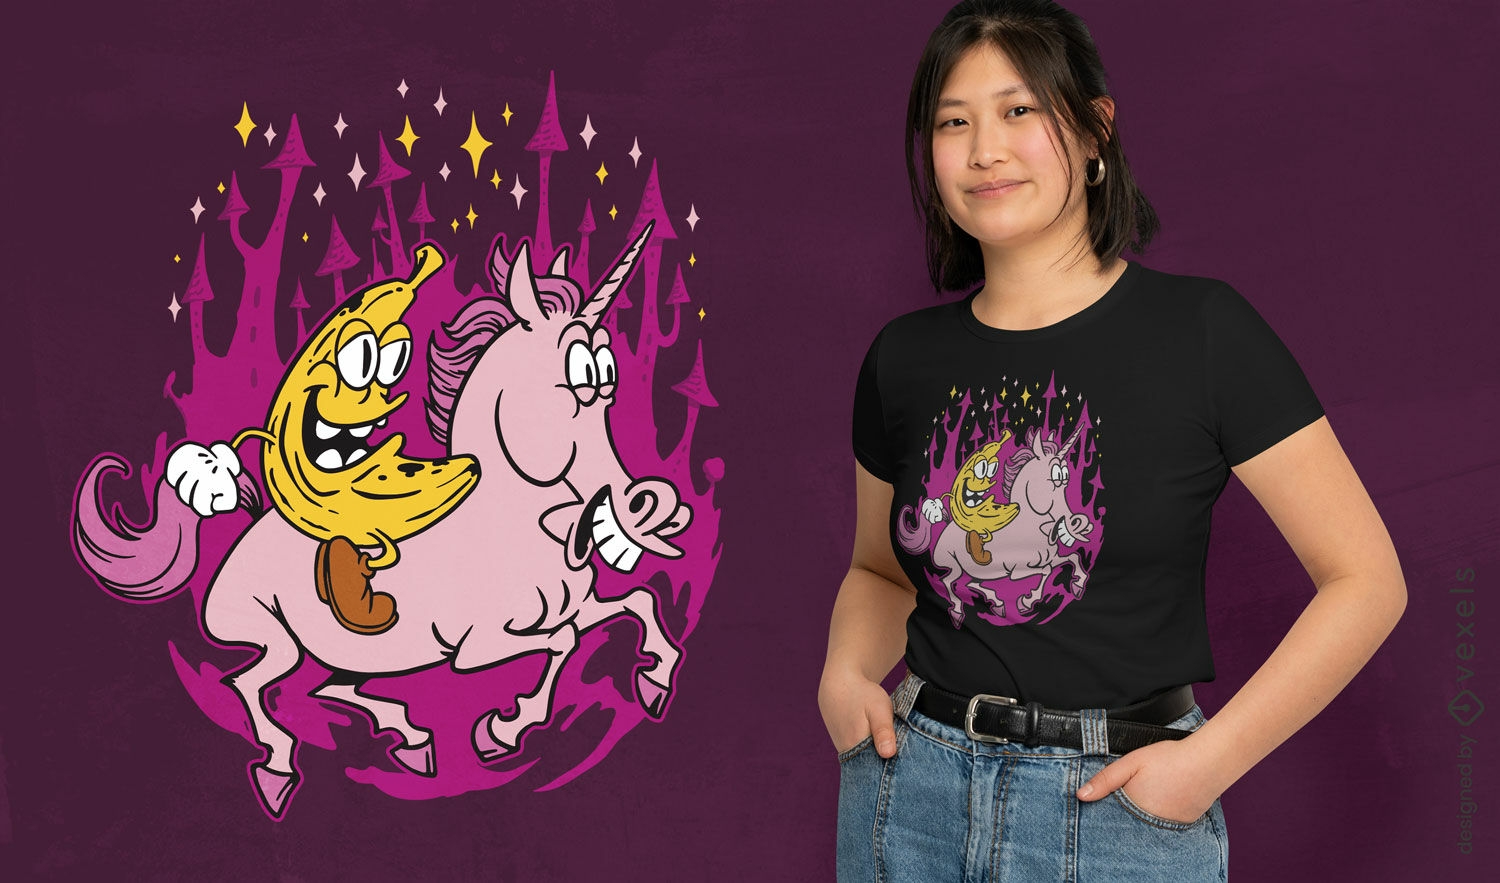 Banana riding unicorn cartoon t-shirt design